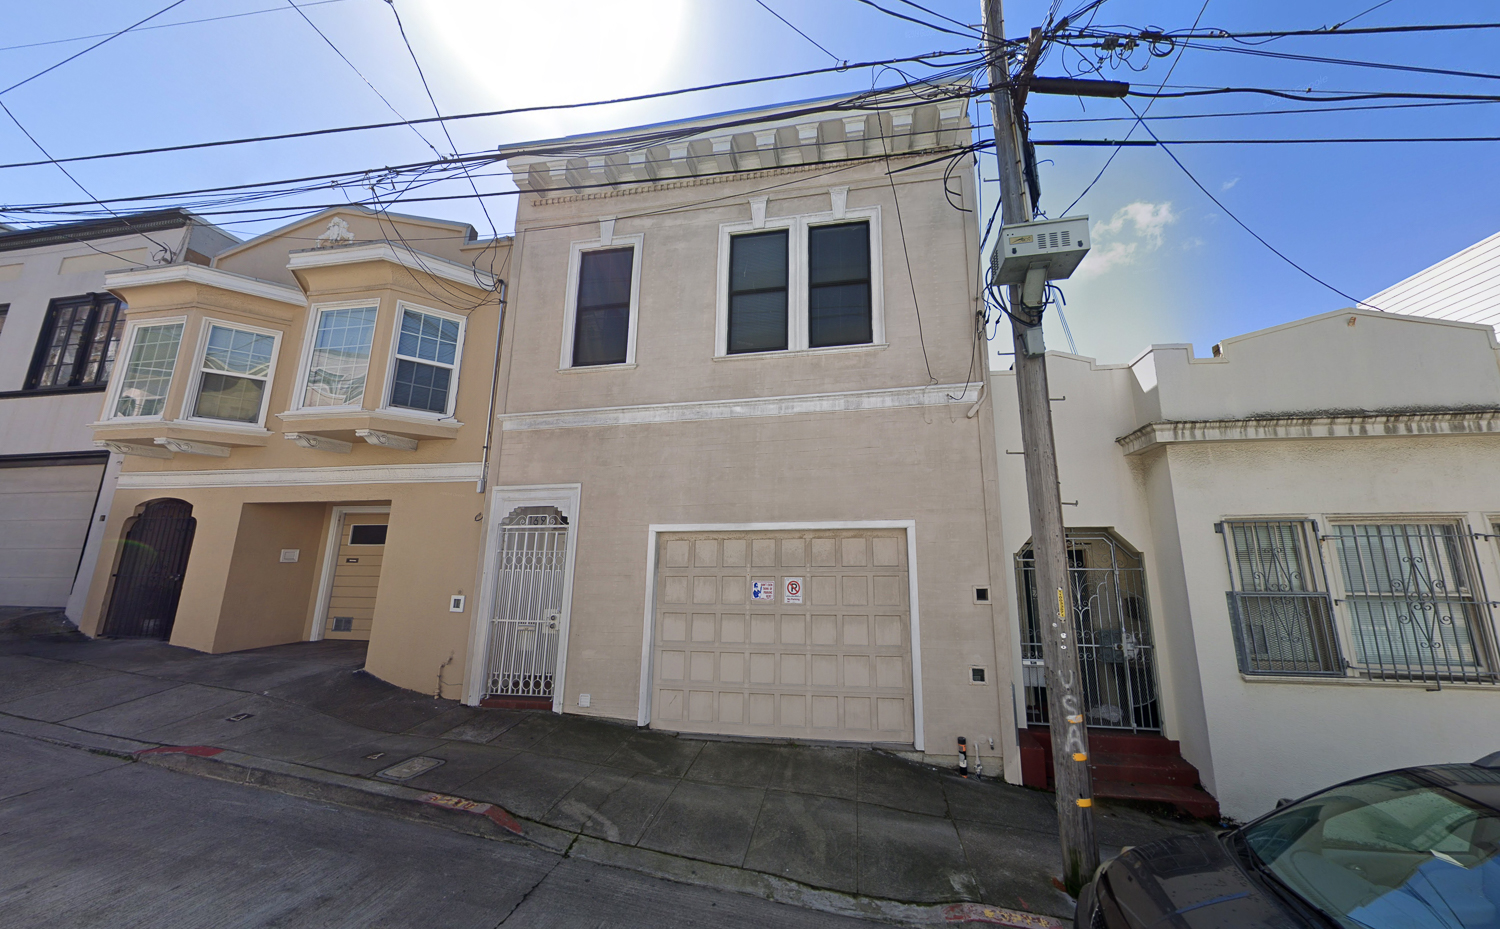 169 Bernard Street, image via Google Street View